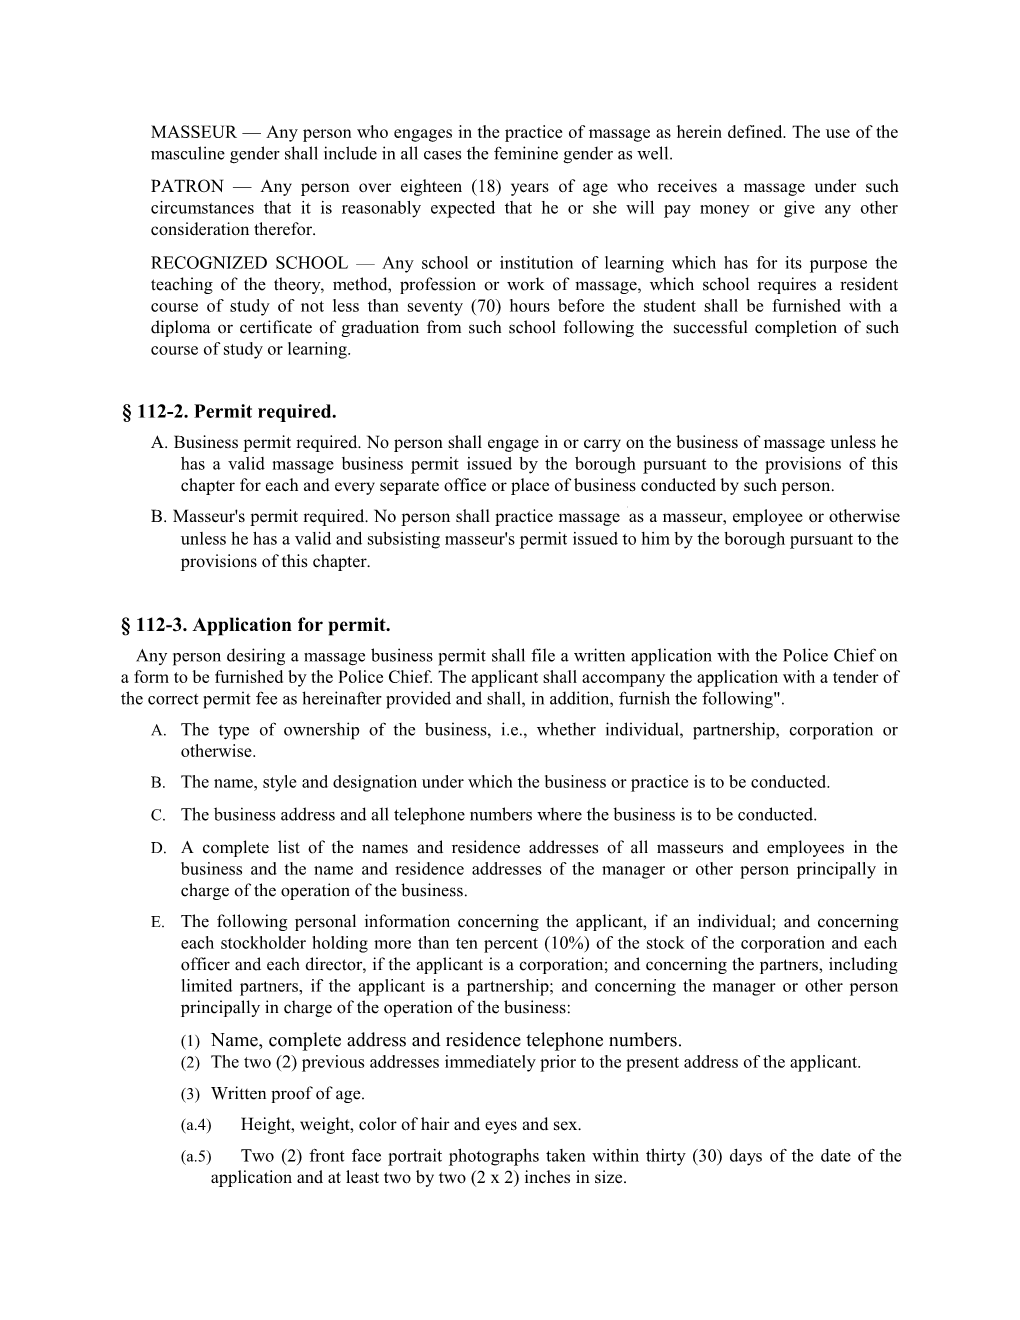 112-4. Application for Masseur's Permit